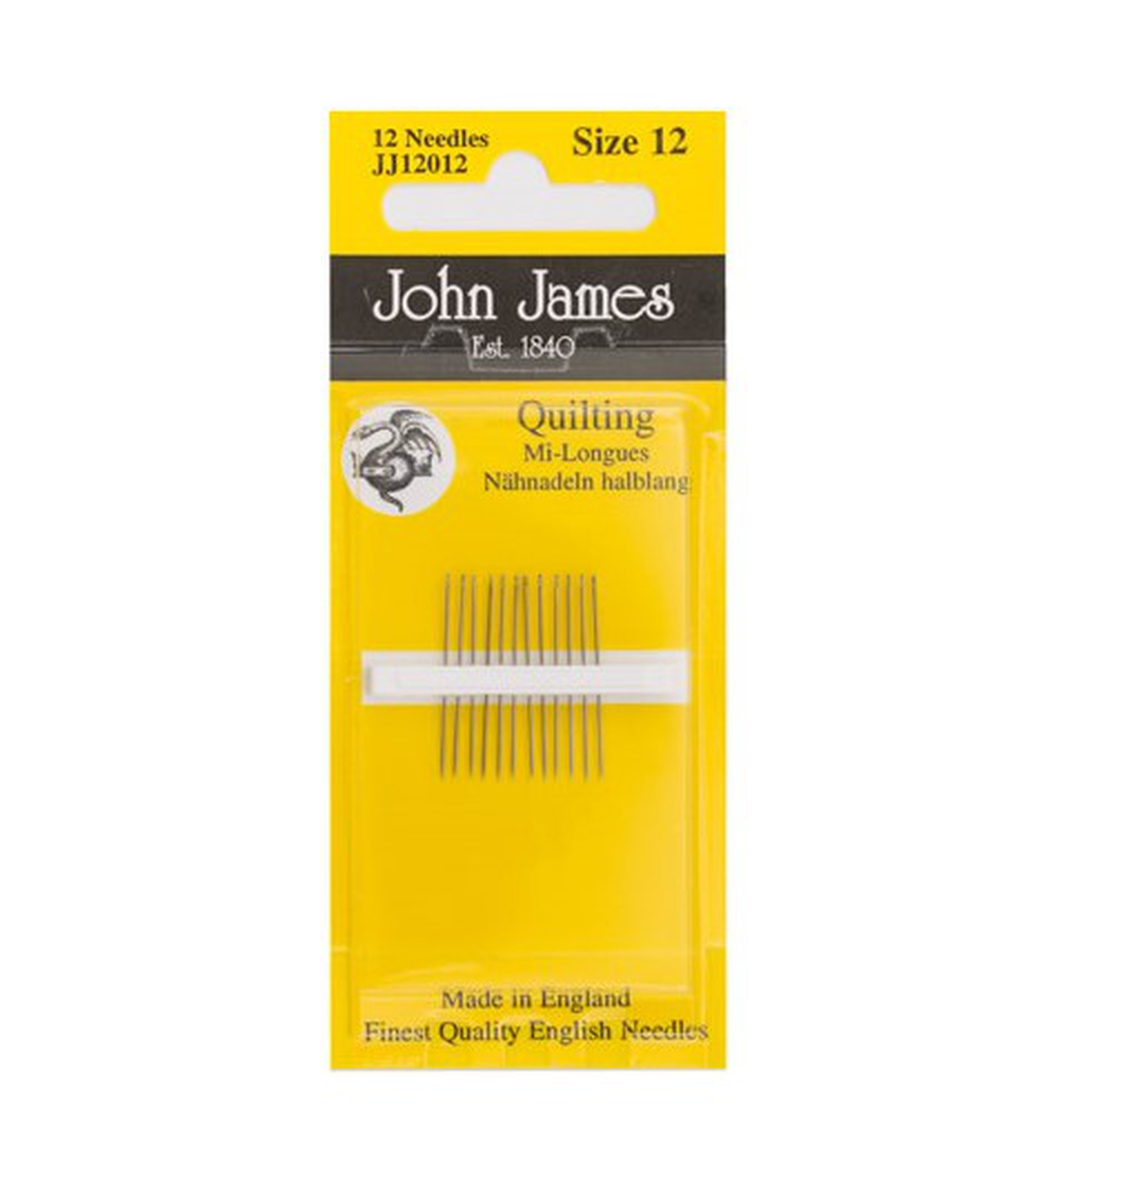 John James - Quilting size 12 - 12 needles